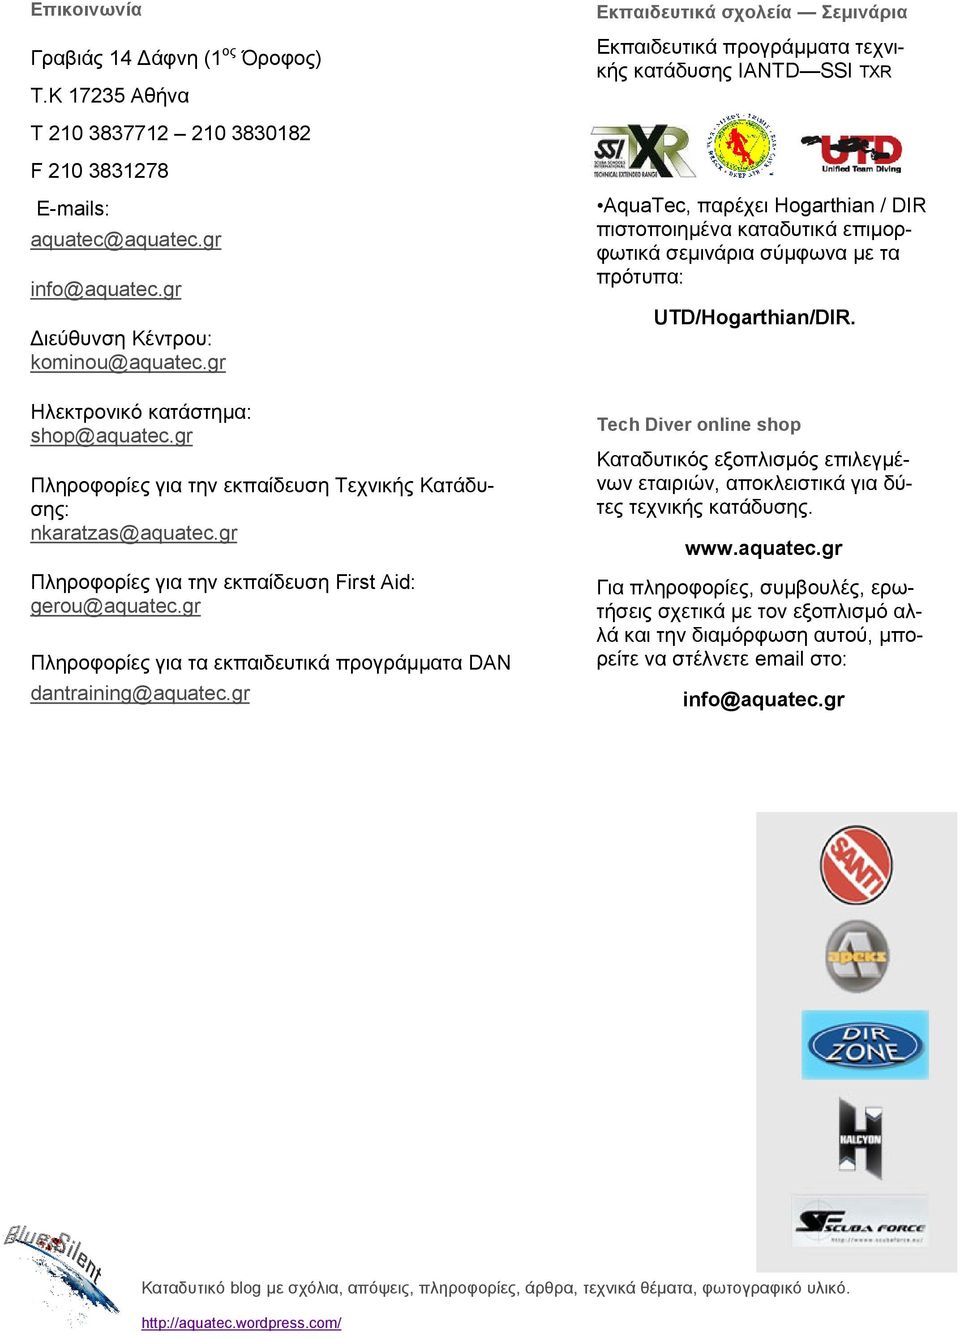 gr Πληροφορίες για την εκπαίδευση Τεχνικής Κατάδυσης: nkaratzas@aquatec.gr Πληροφορίες για την εκπαίδευση First Aid: gerou@aquatec.